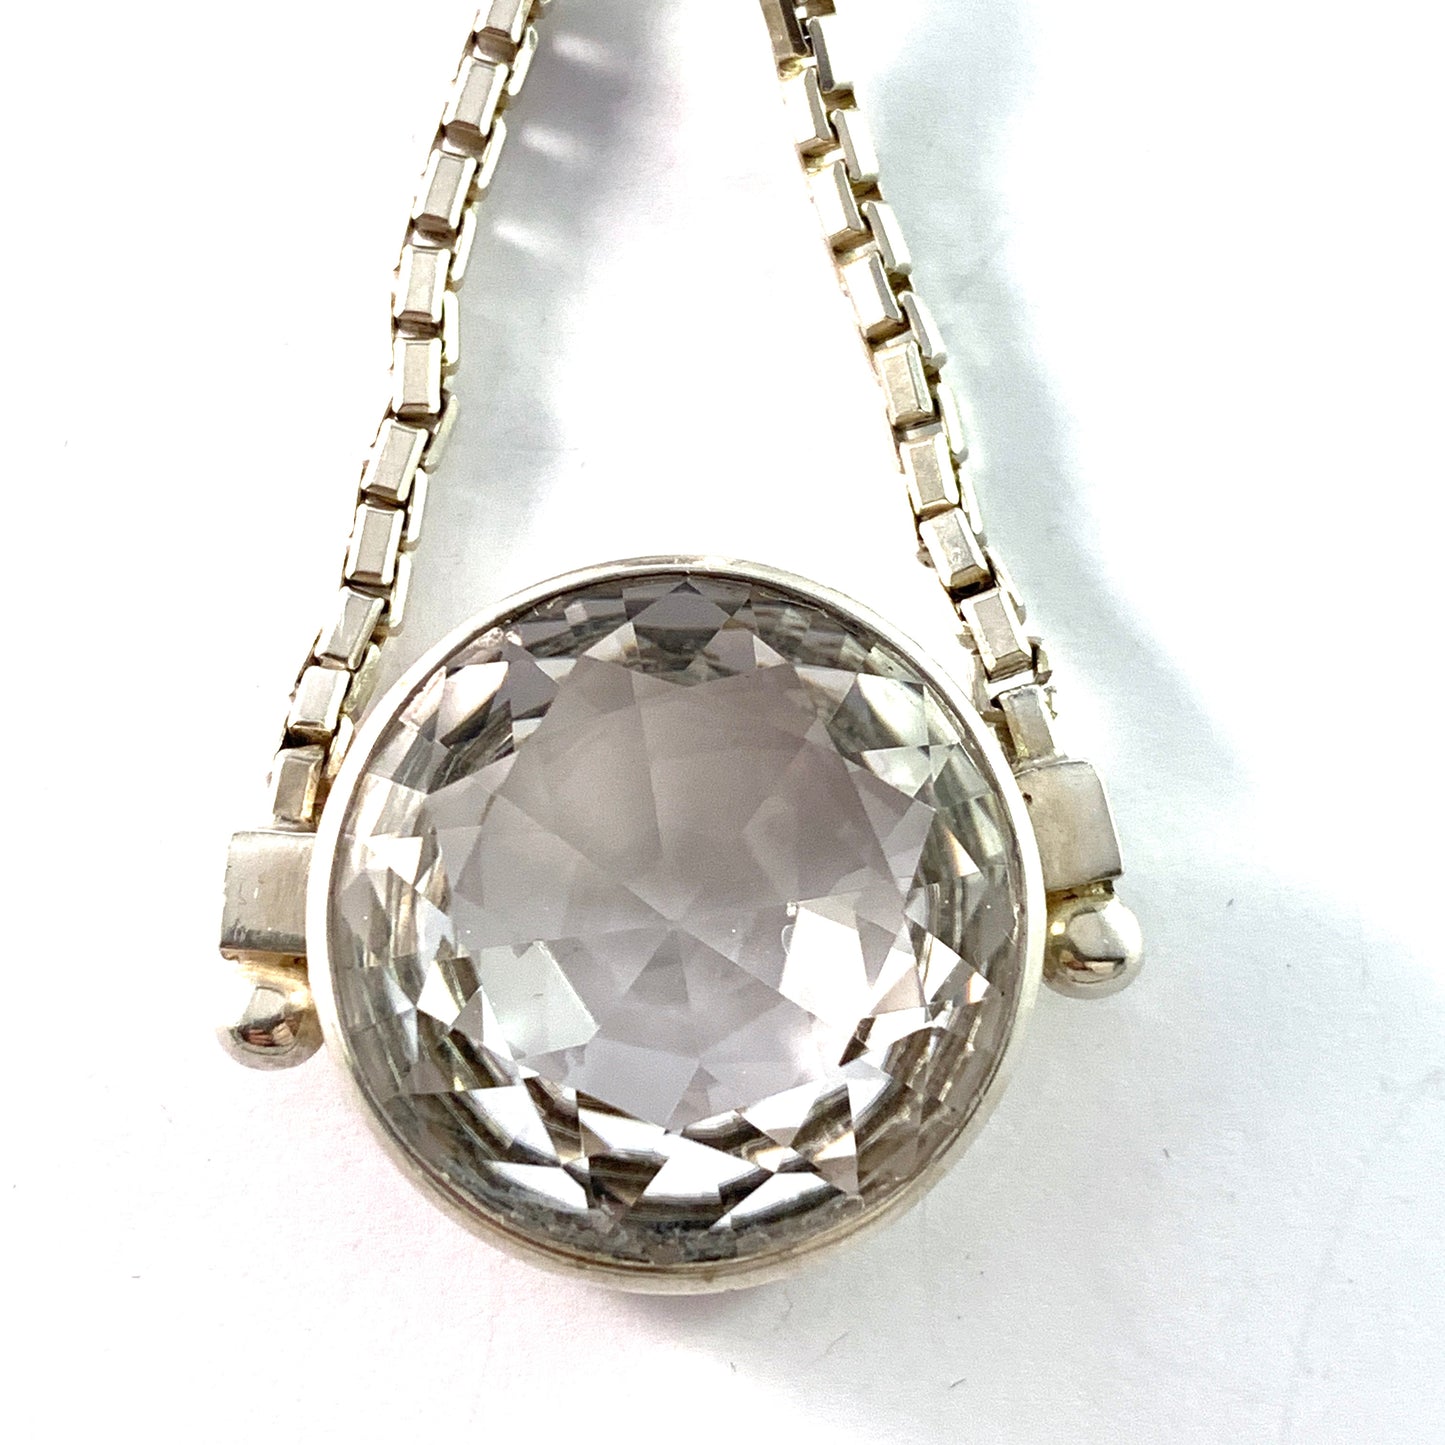 Atelje Stigbert, Sweden year 1950. Massive 2.1oz Solid Silver Rock Crystal Necklace.